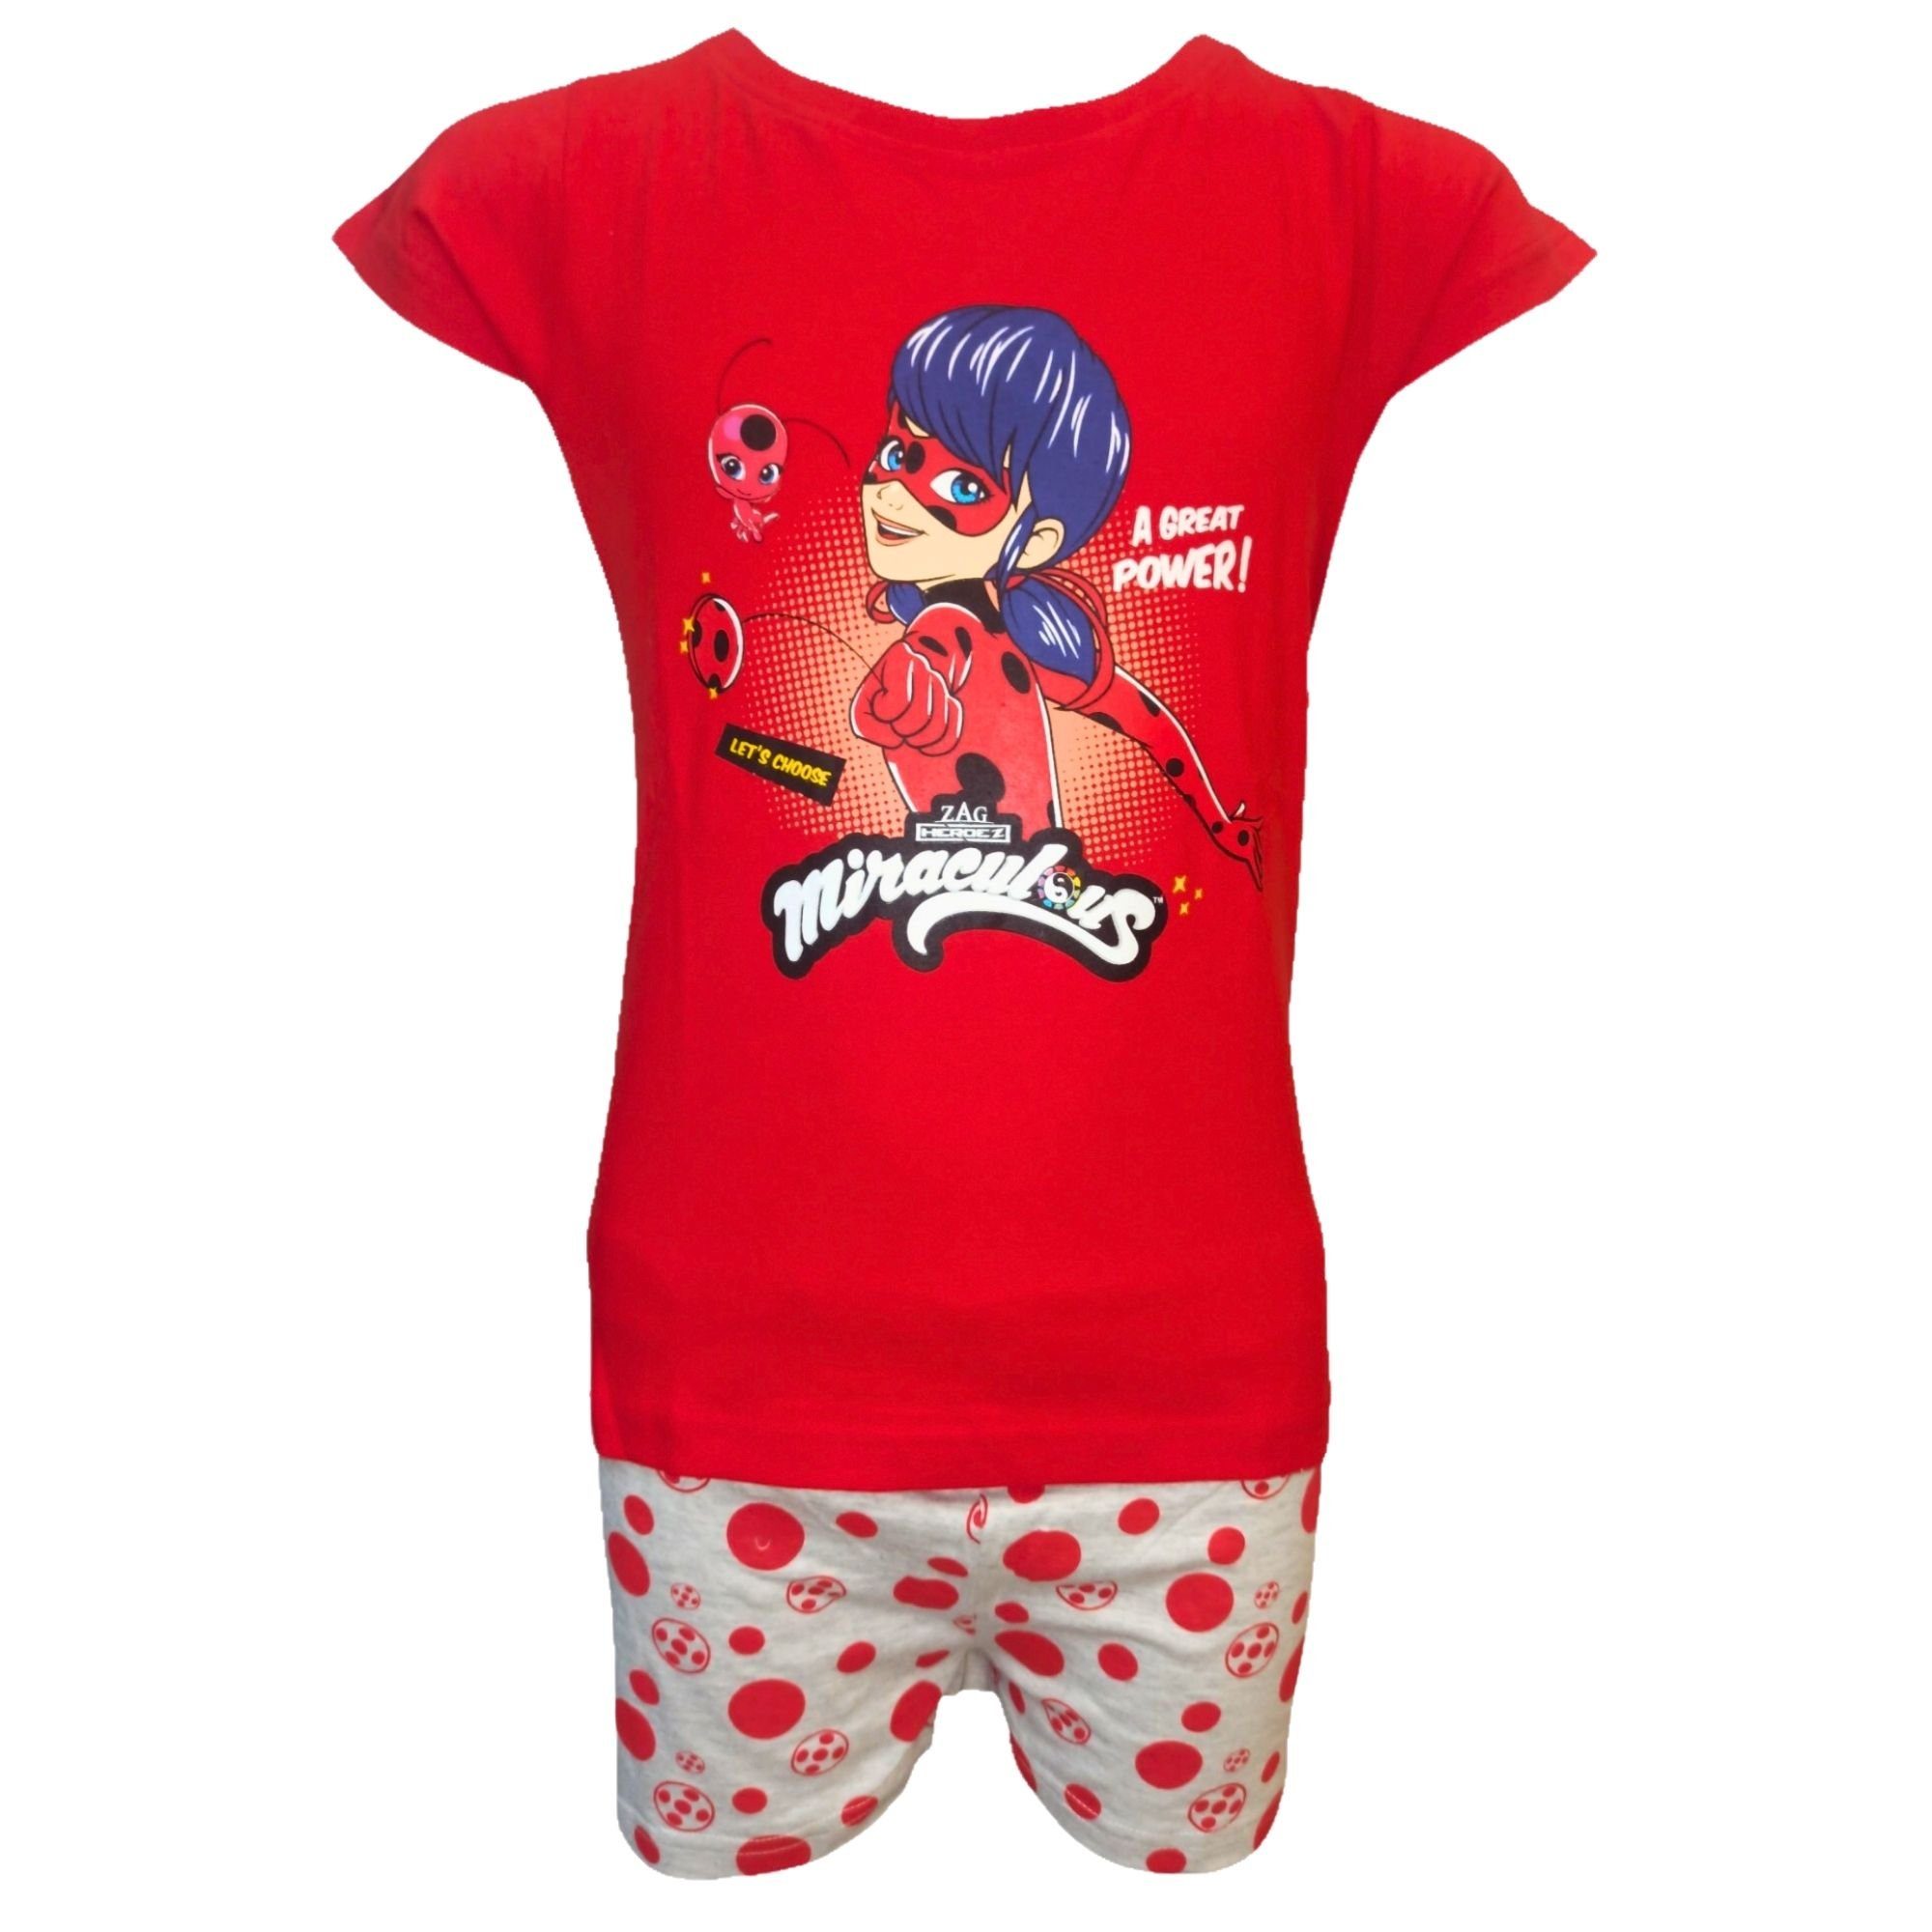 Miraculous - Ladybug Schlafanzug A GREAT POWER! (2 tlg) Pyjama Set kurz -  Mädchen Shorty Gr. 116-146 cm